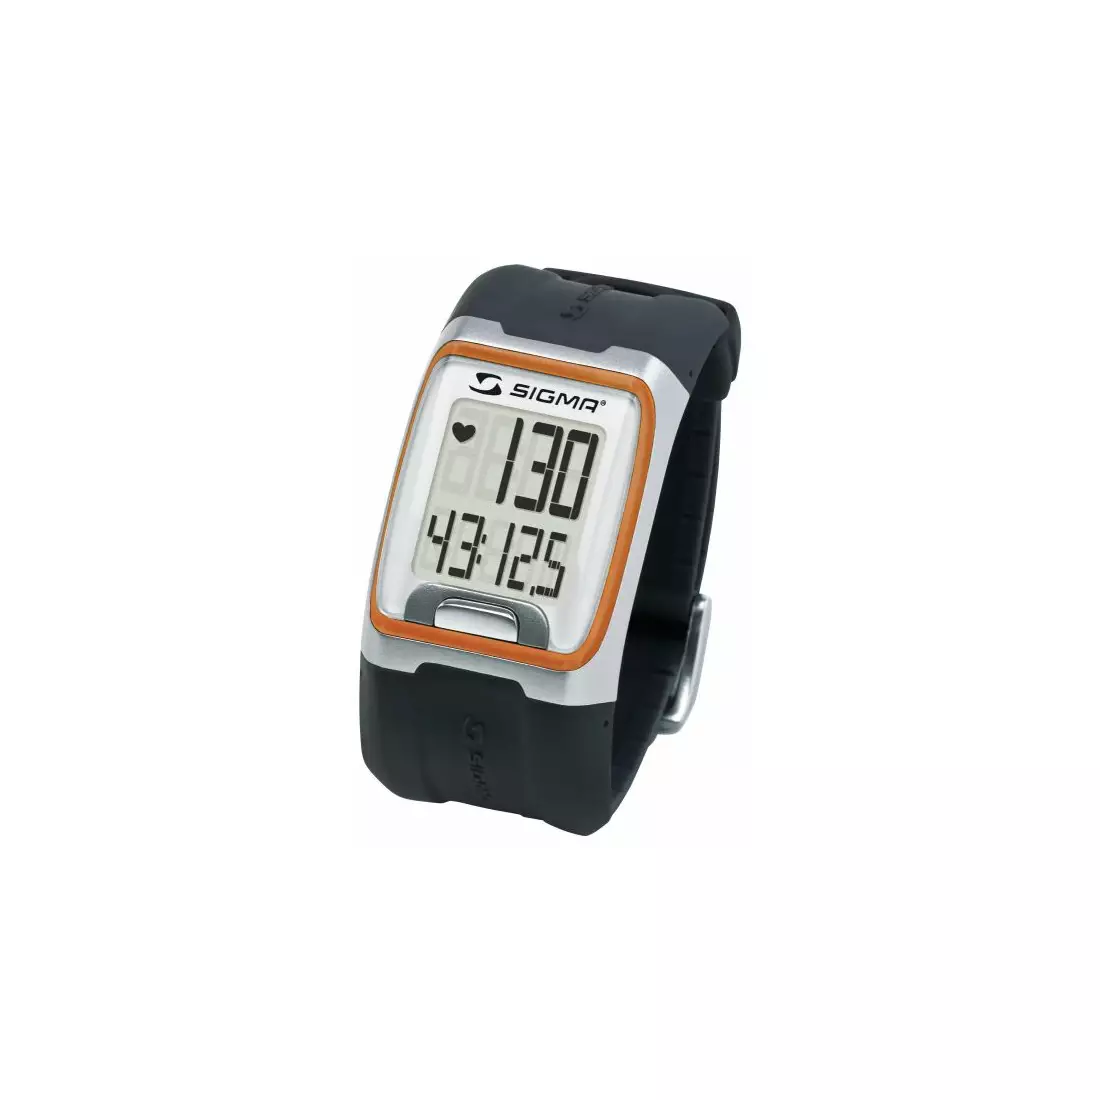 SIGMA SPORT PC 3.11 heart rate monitor - color: Black and orange